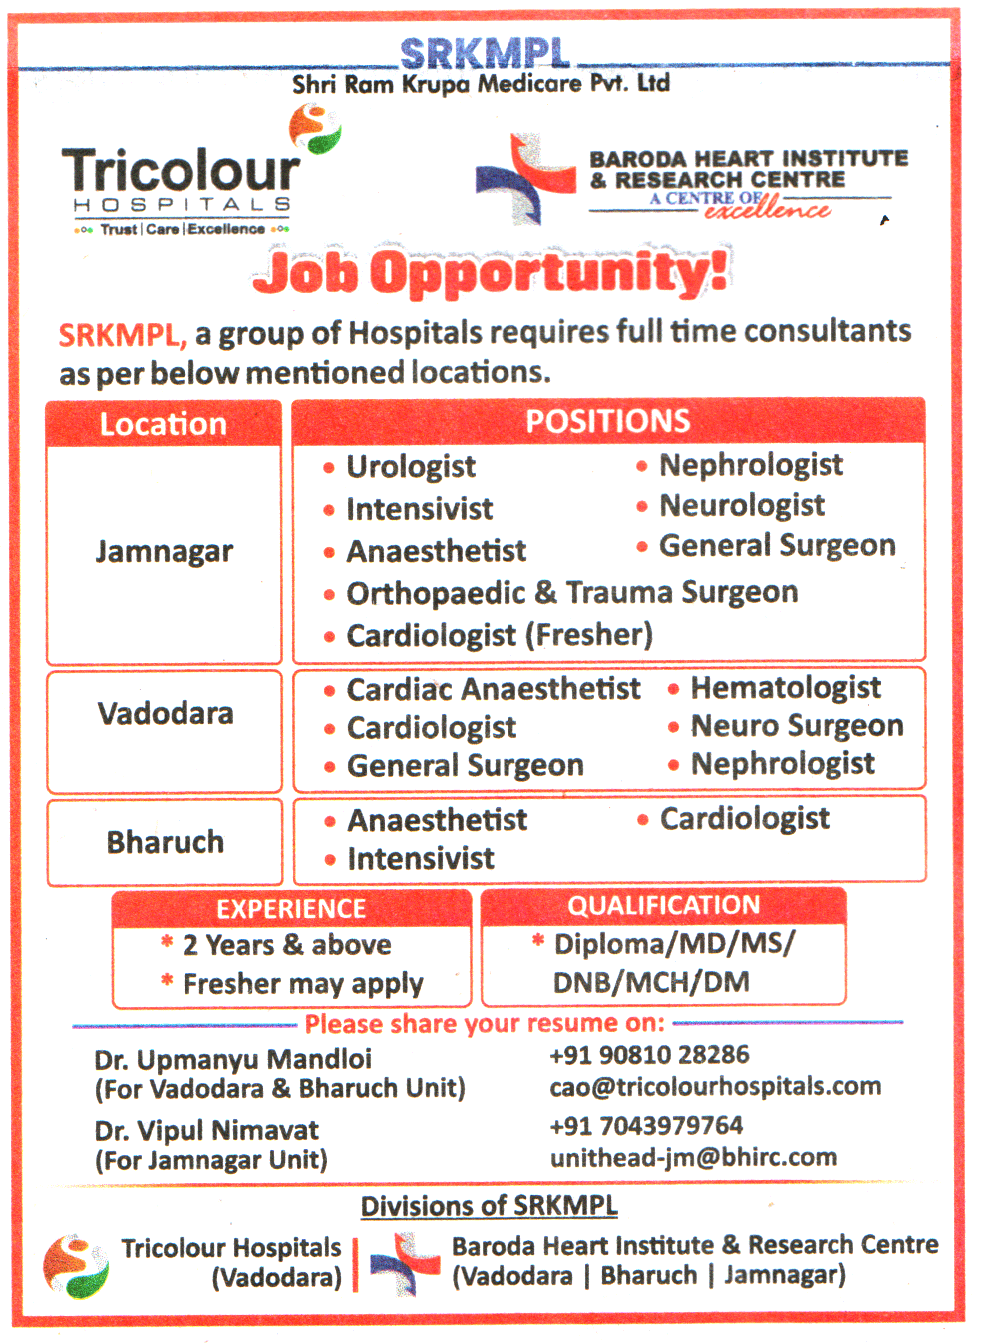 Shri Ram Krupa Medicare Pvt. Ltd (SRKMPL) Recruitment